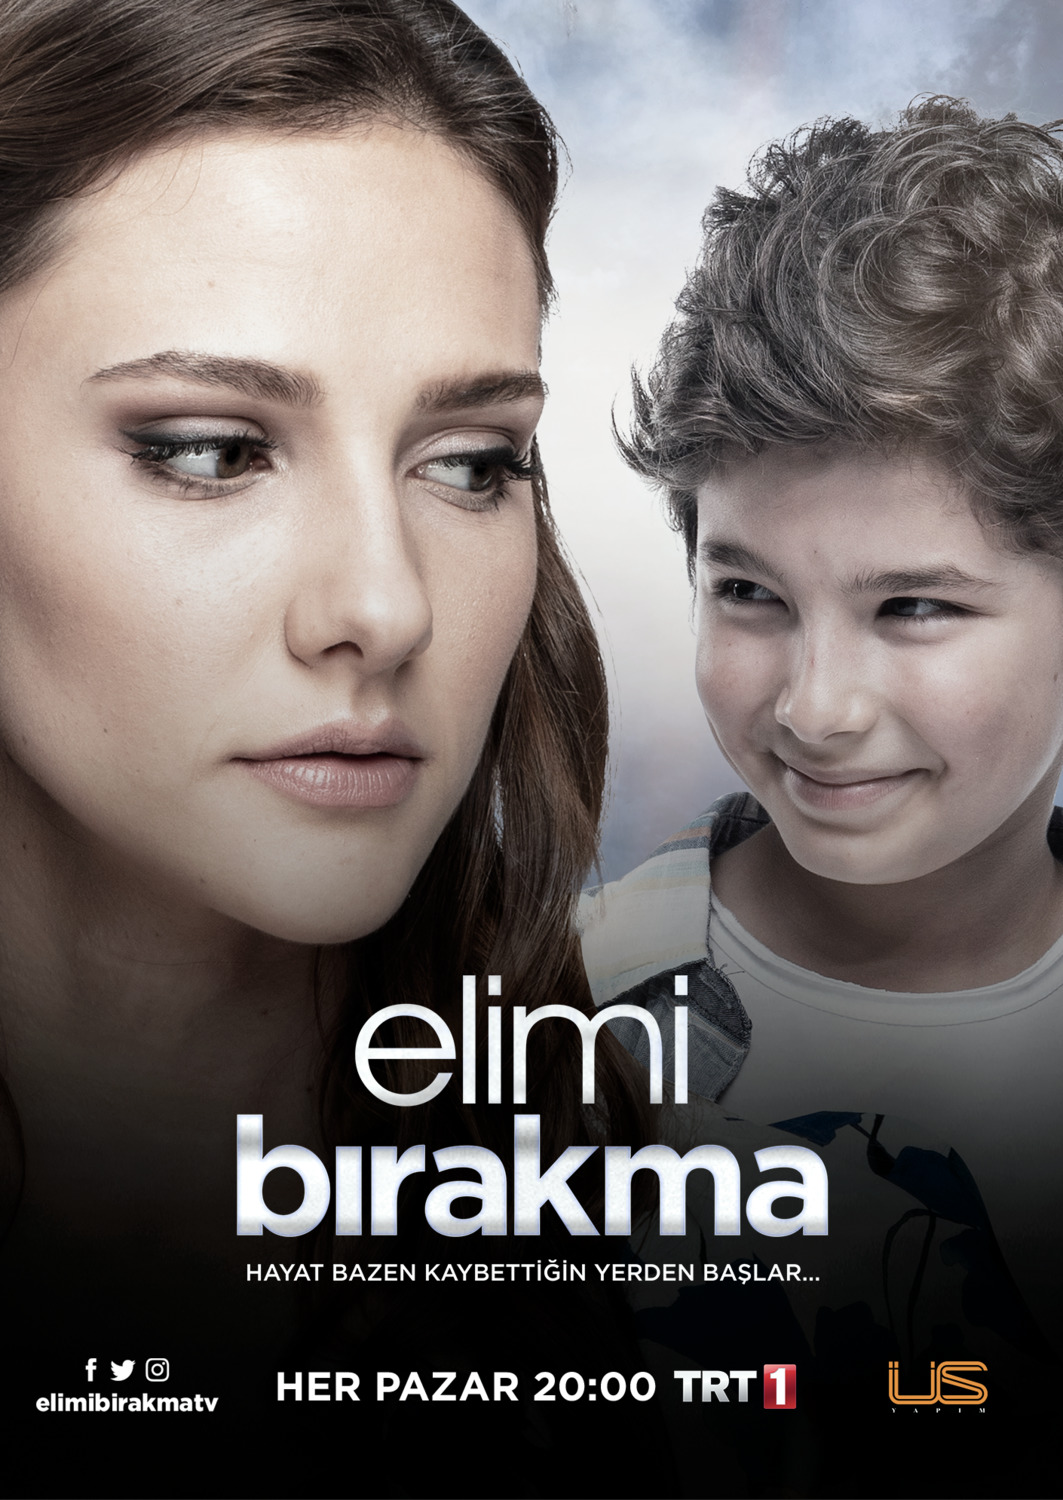 Extra Large TV Poster Image for Elimi birakma (#8 of 20)